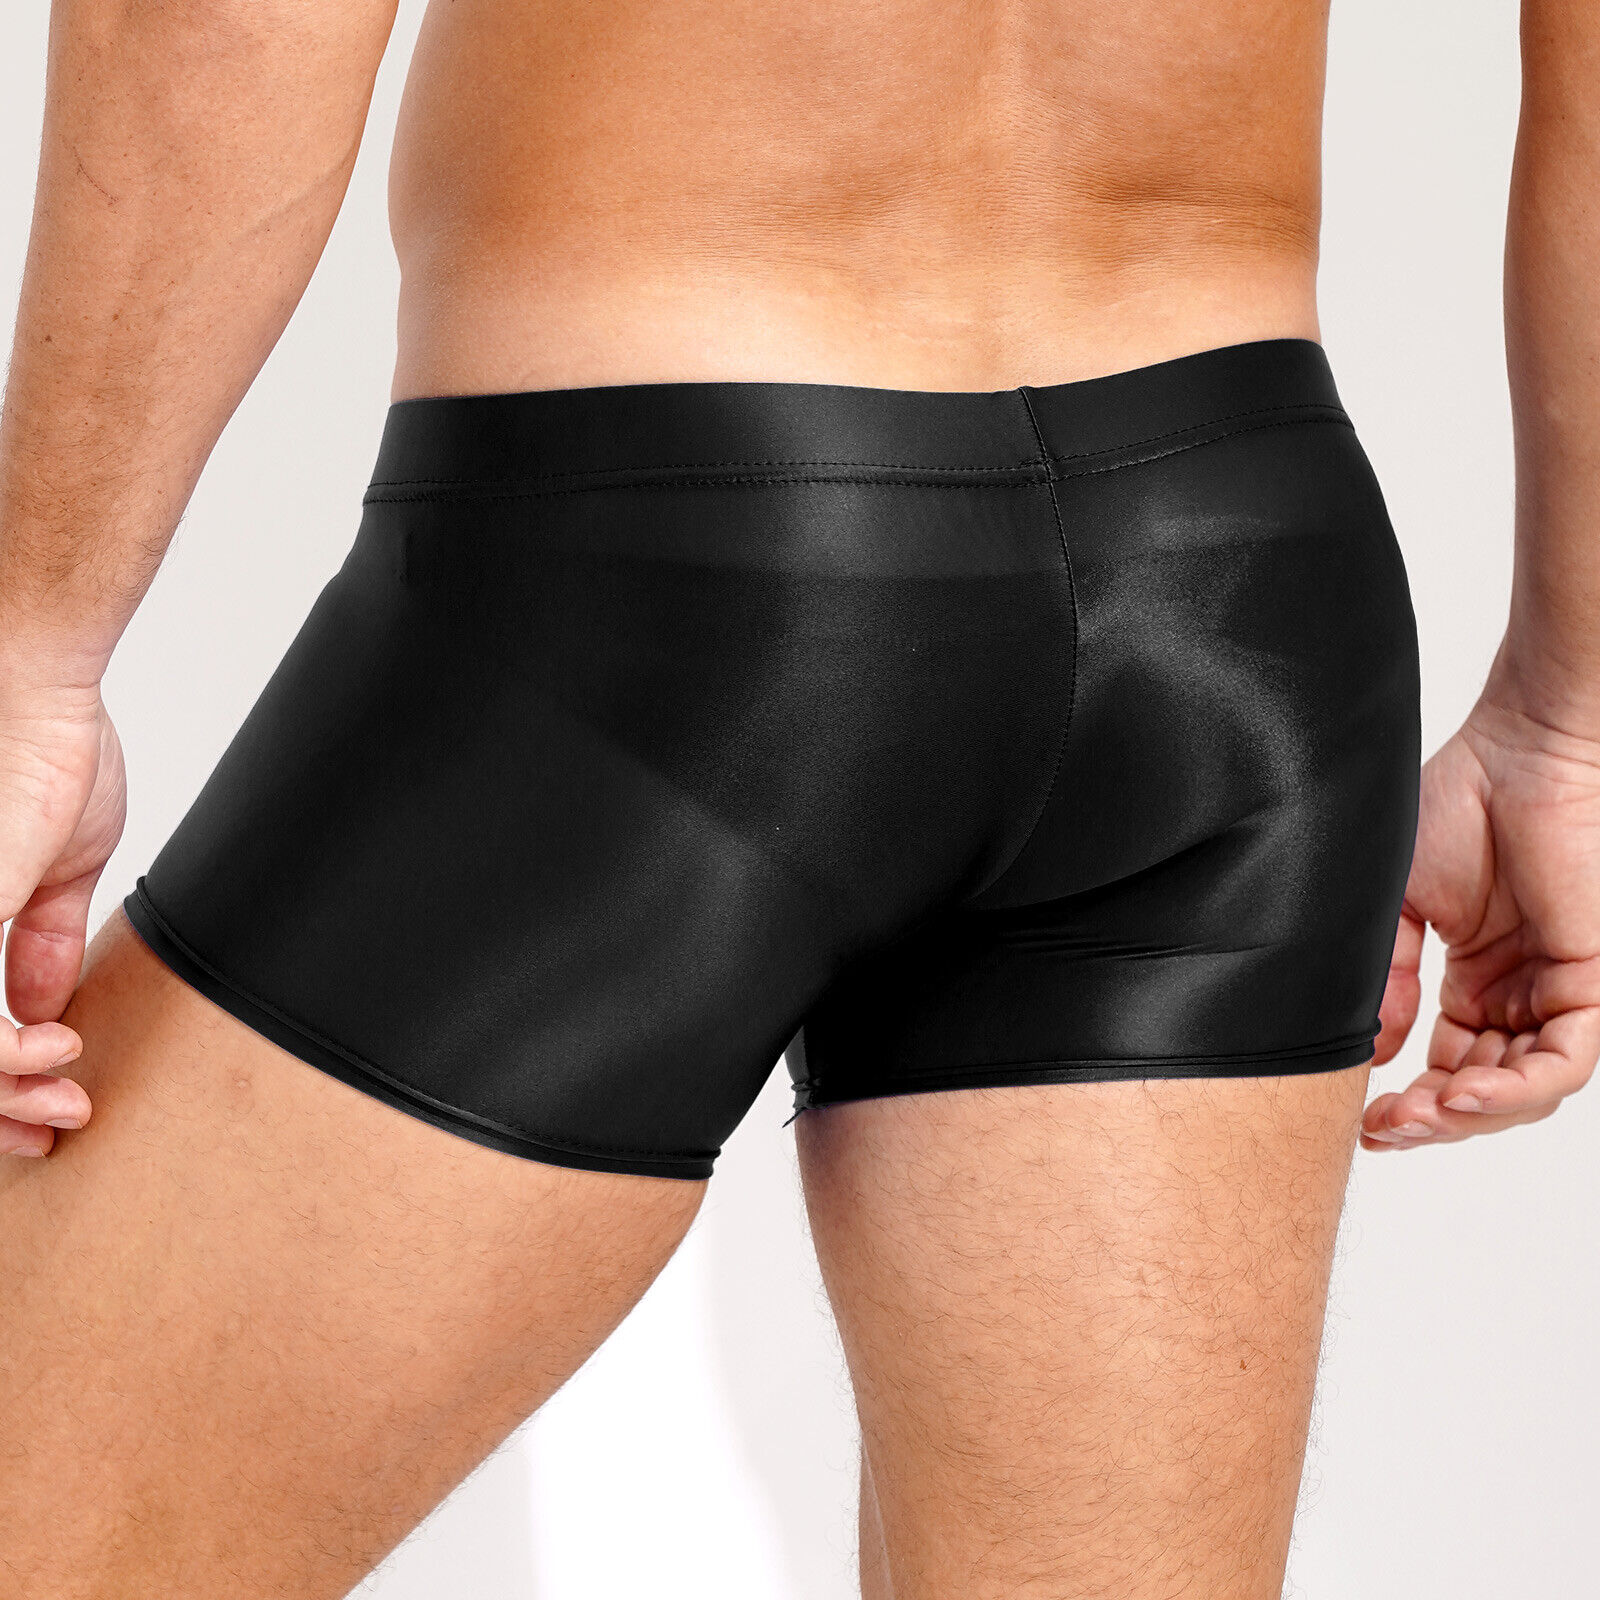 DE Herren Glossy Slip Nylon Männer Boxer Briefs Low Waist Bulge Pouch Unterhosen